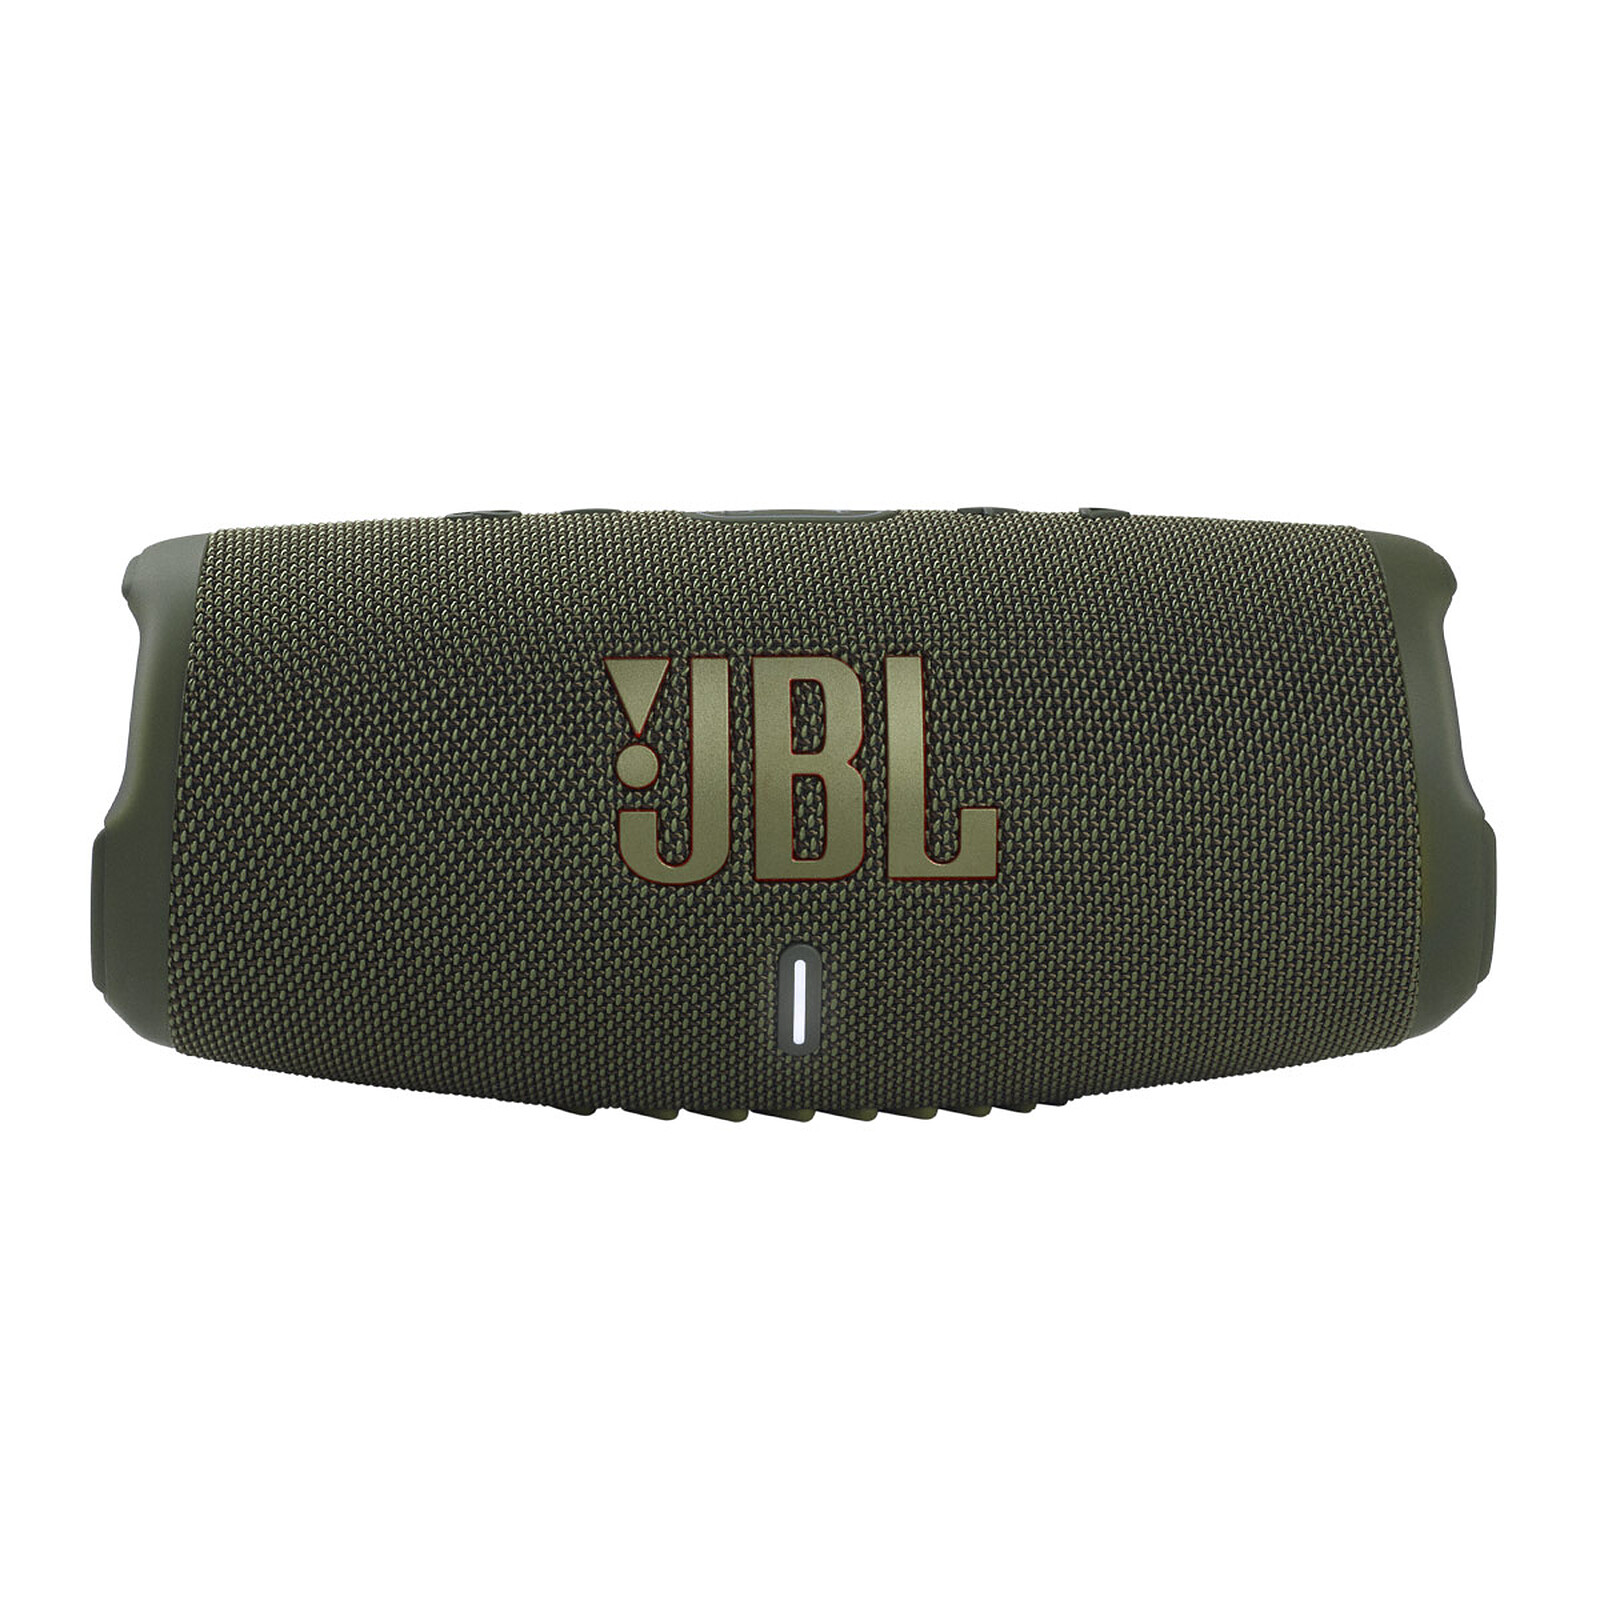 Enceinte Bluetooth JBL Charge 5 - Camouflage - Enceinte